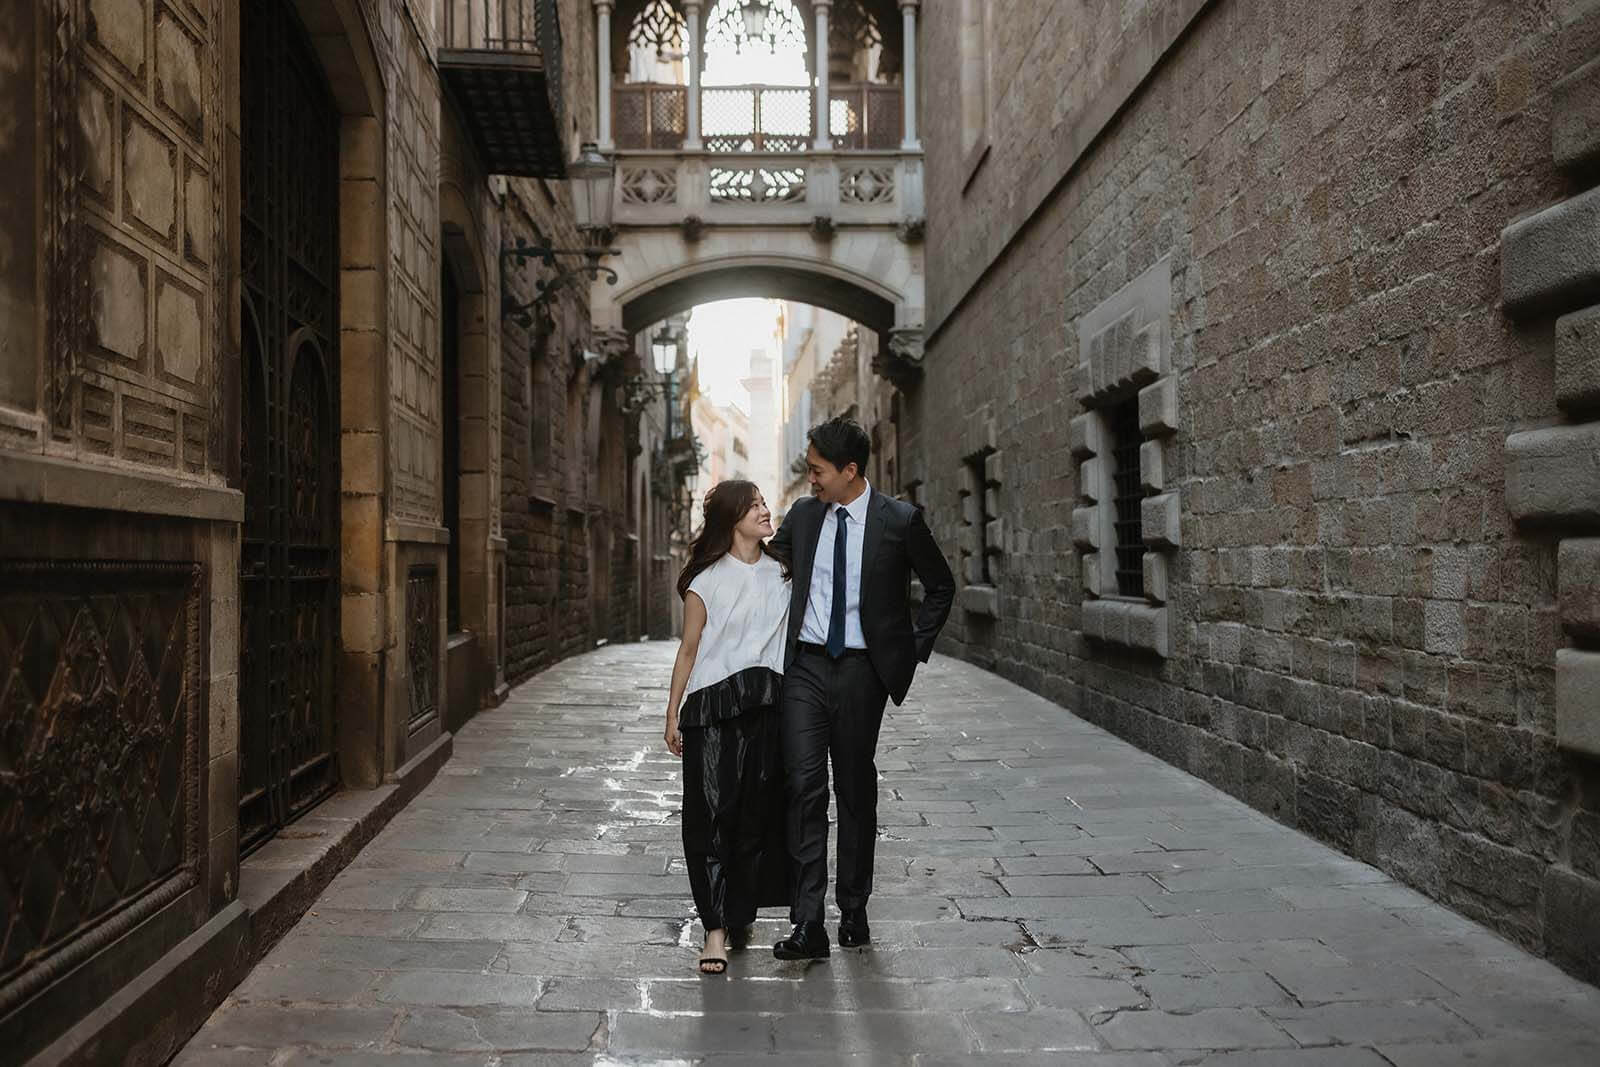 Totte | お客様体験談 スペイン・バルセロナで『プロポーズ撮影』